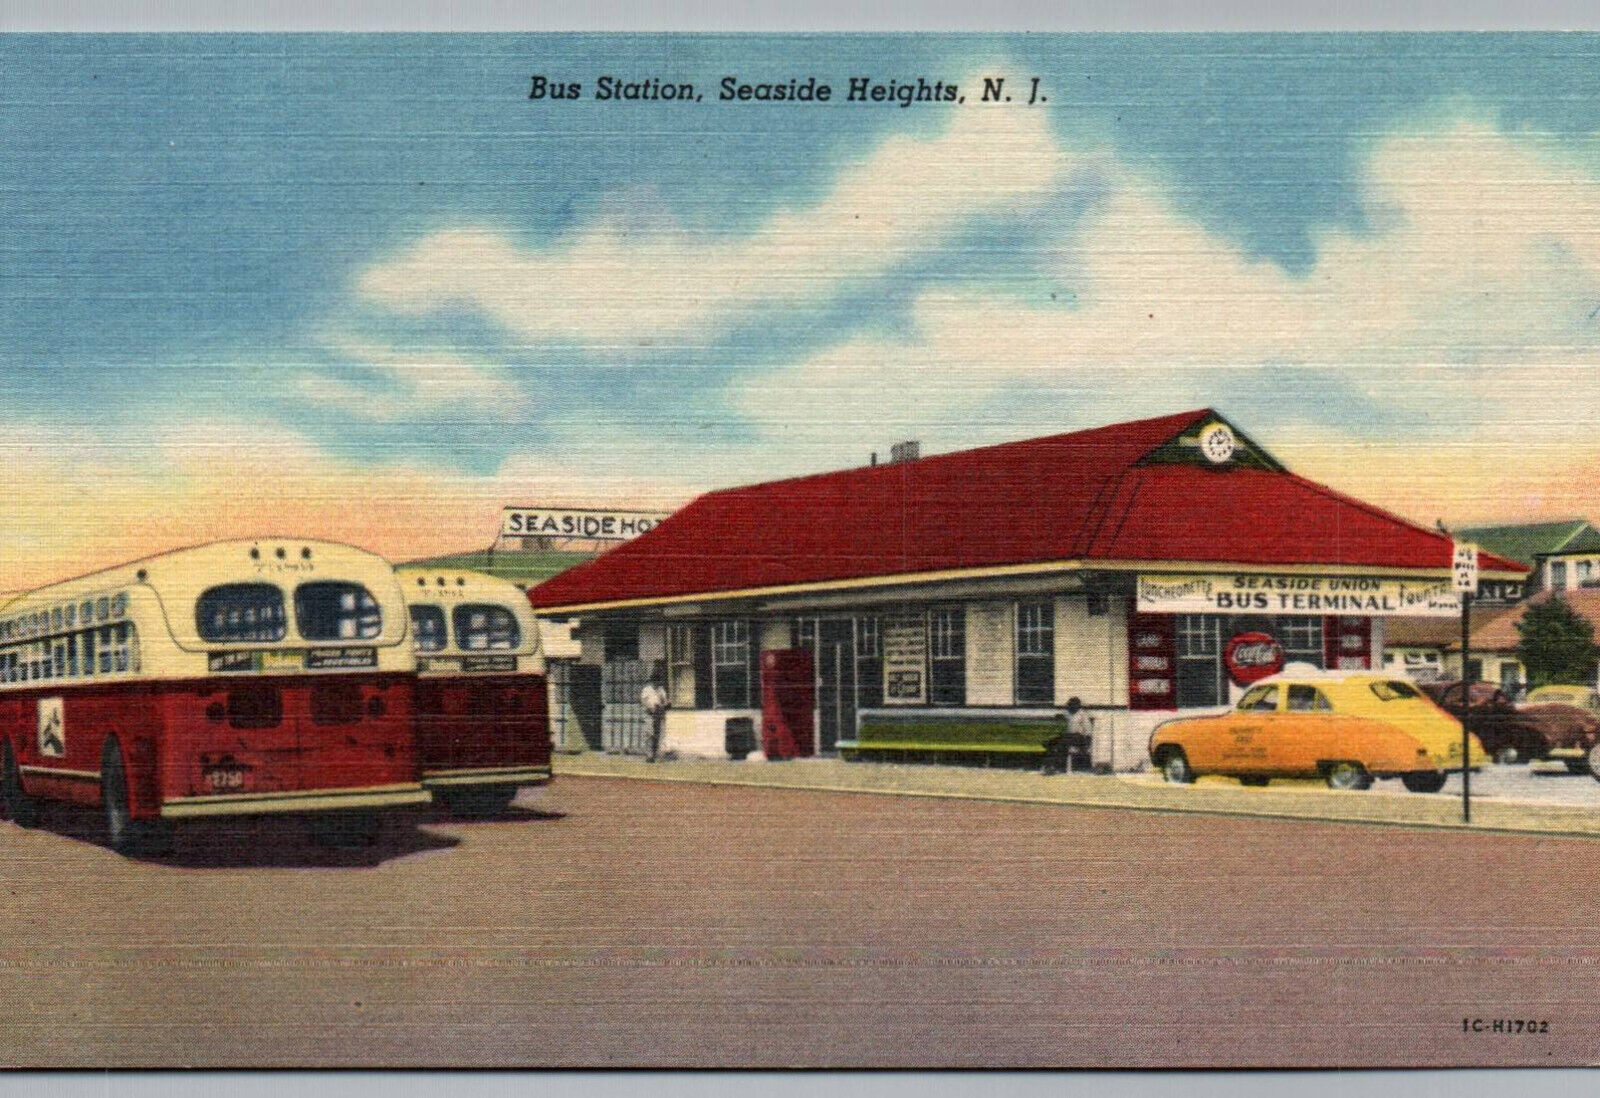 Seaside Heights NJ Bus Station Postcard Vintage Linen Old Bus Terminal Car Coke